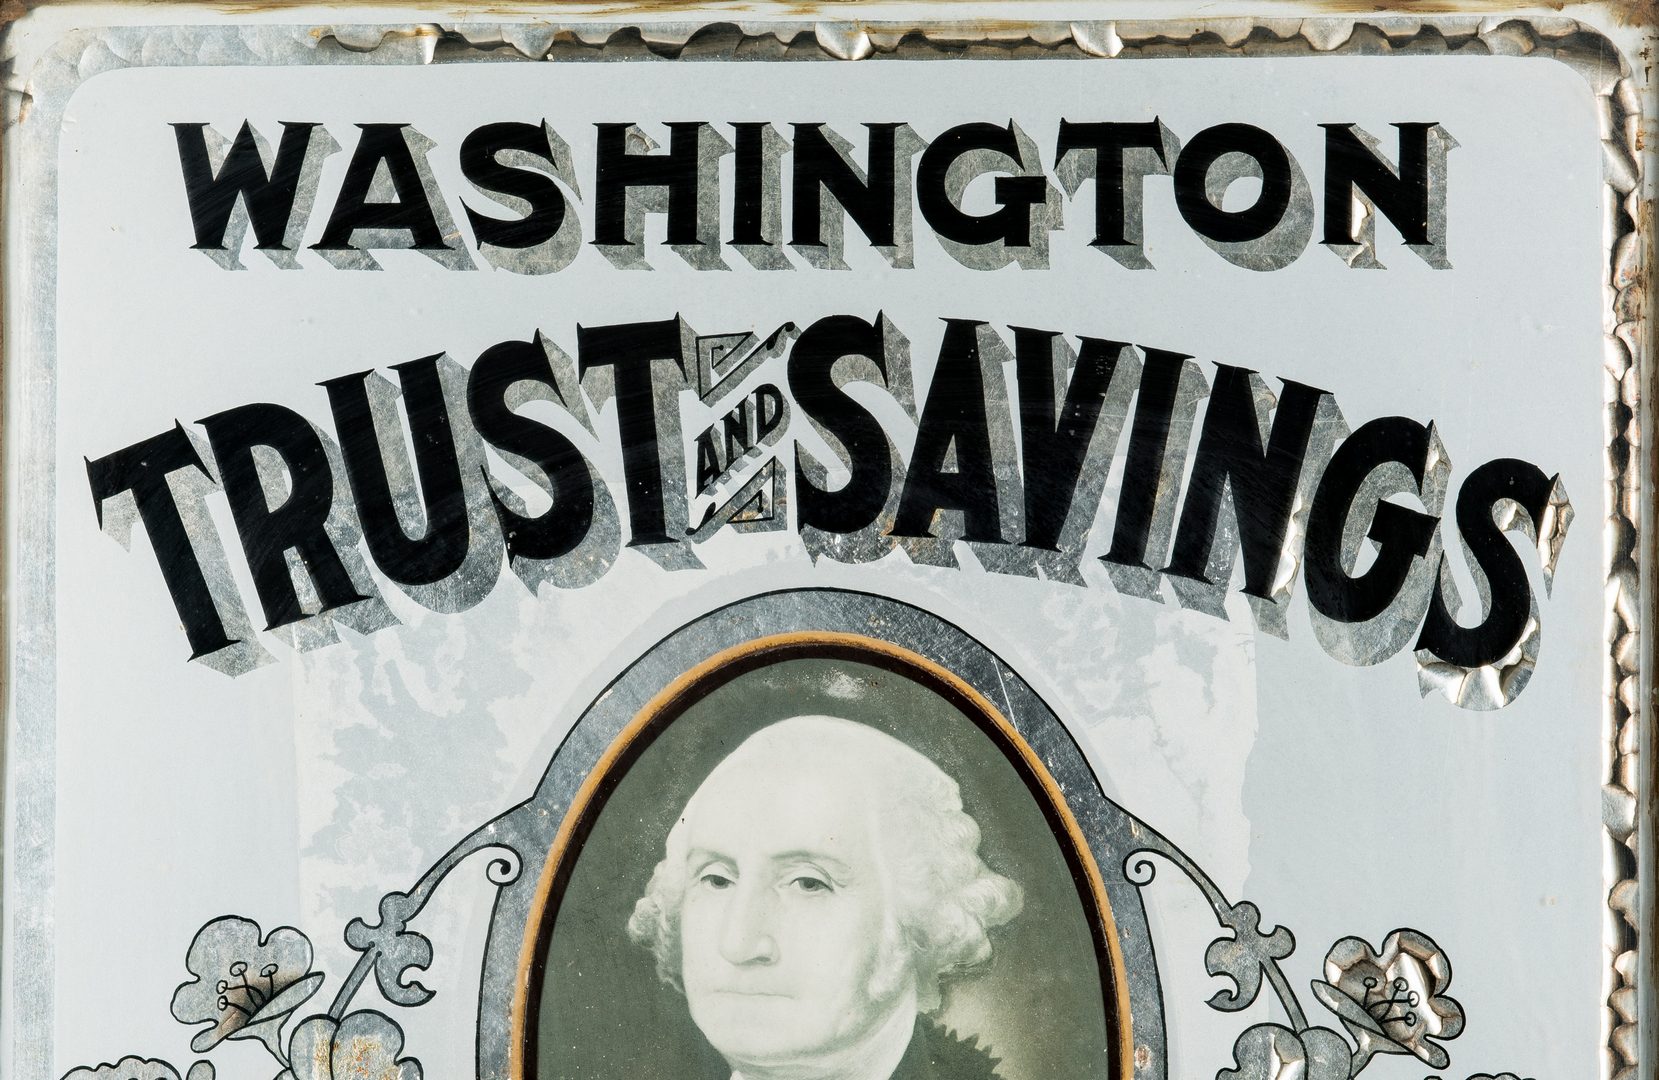 Lot 704: Washington Trust & Savings Advertising Sign